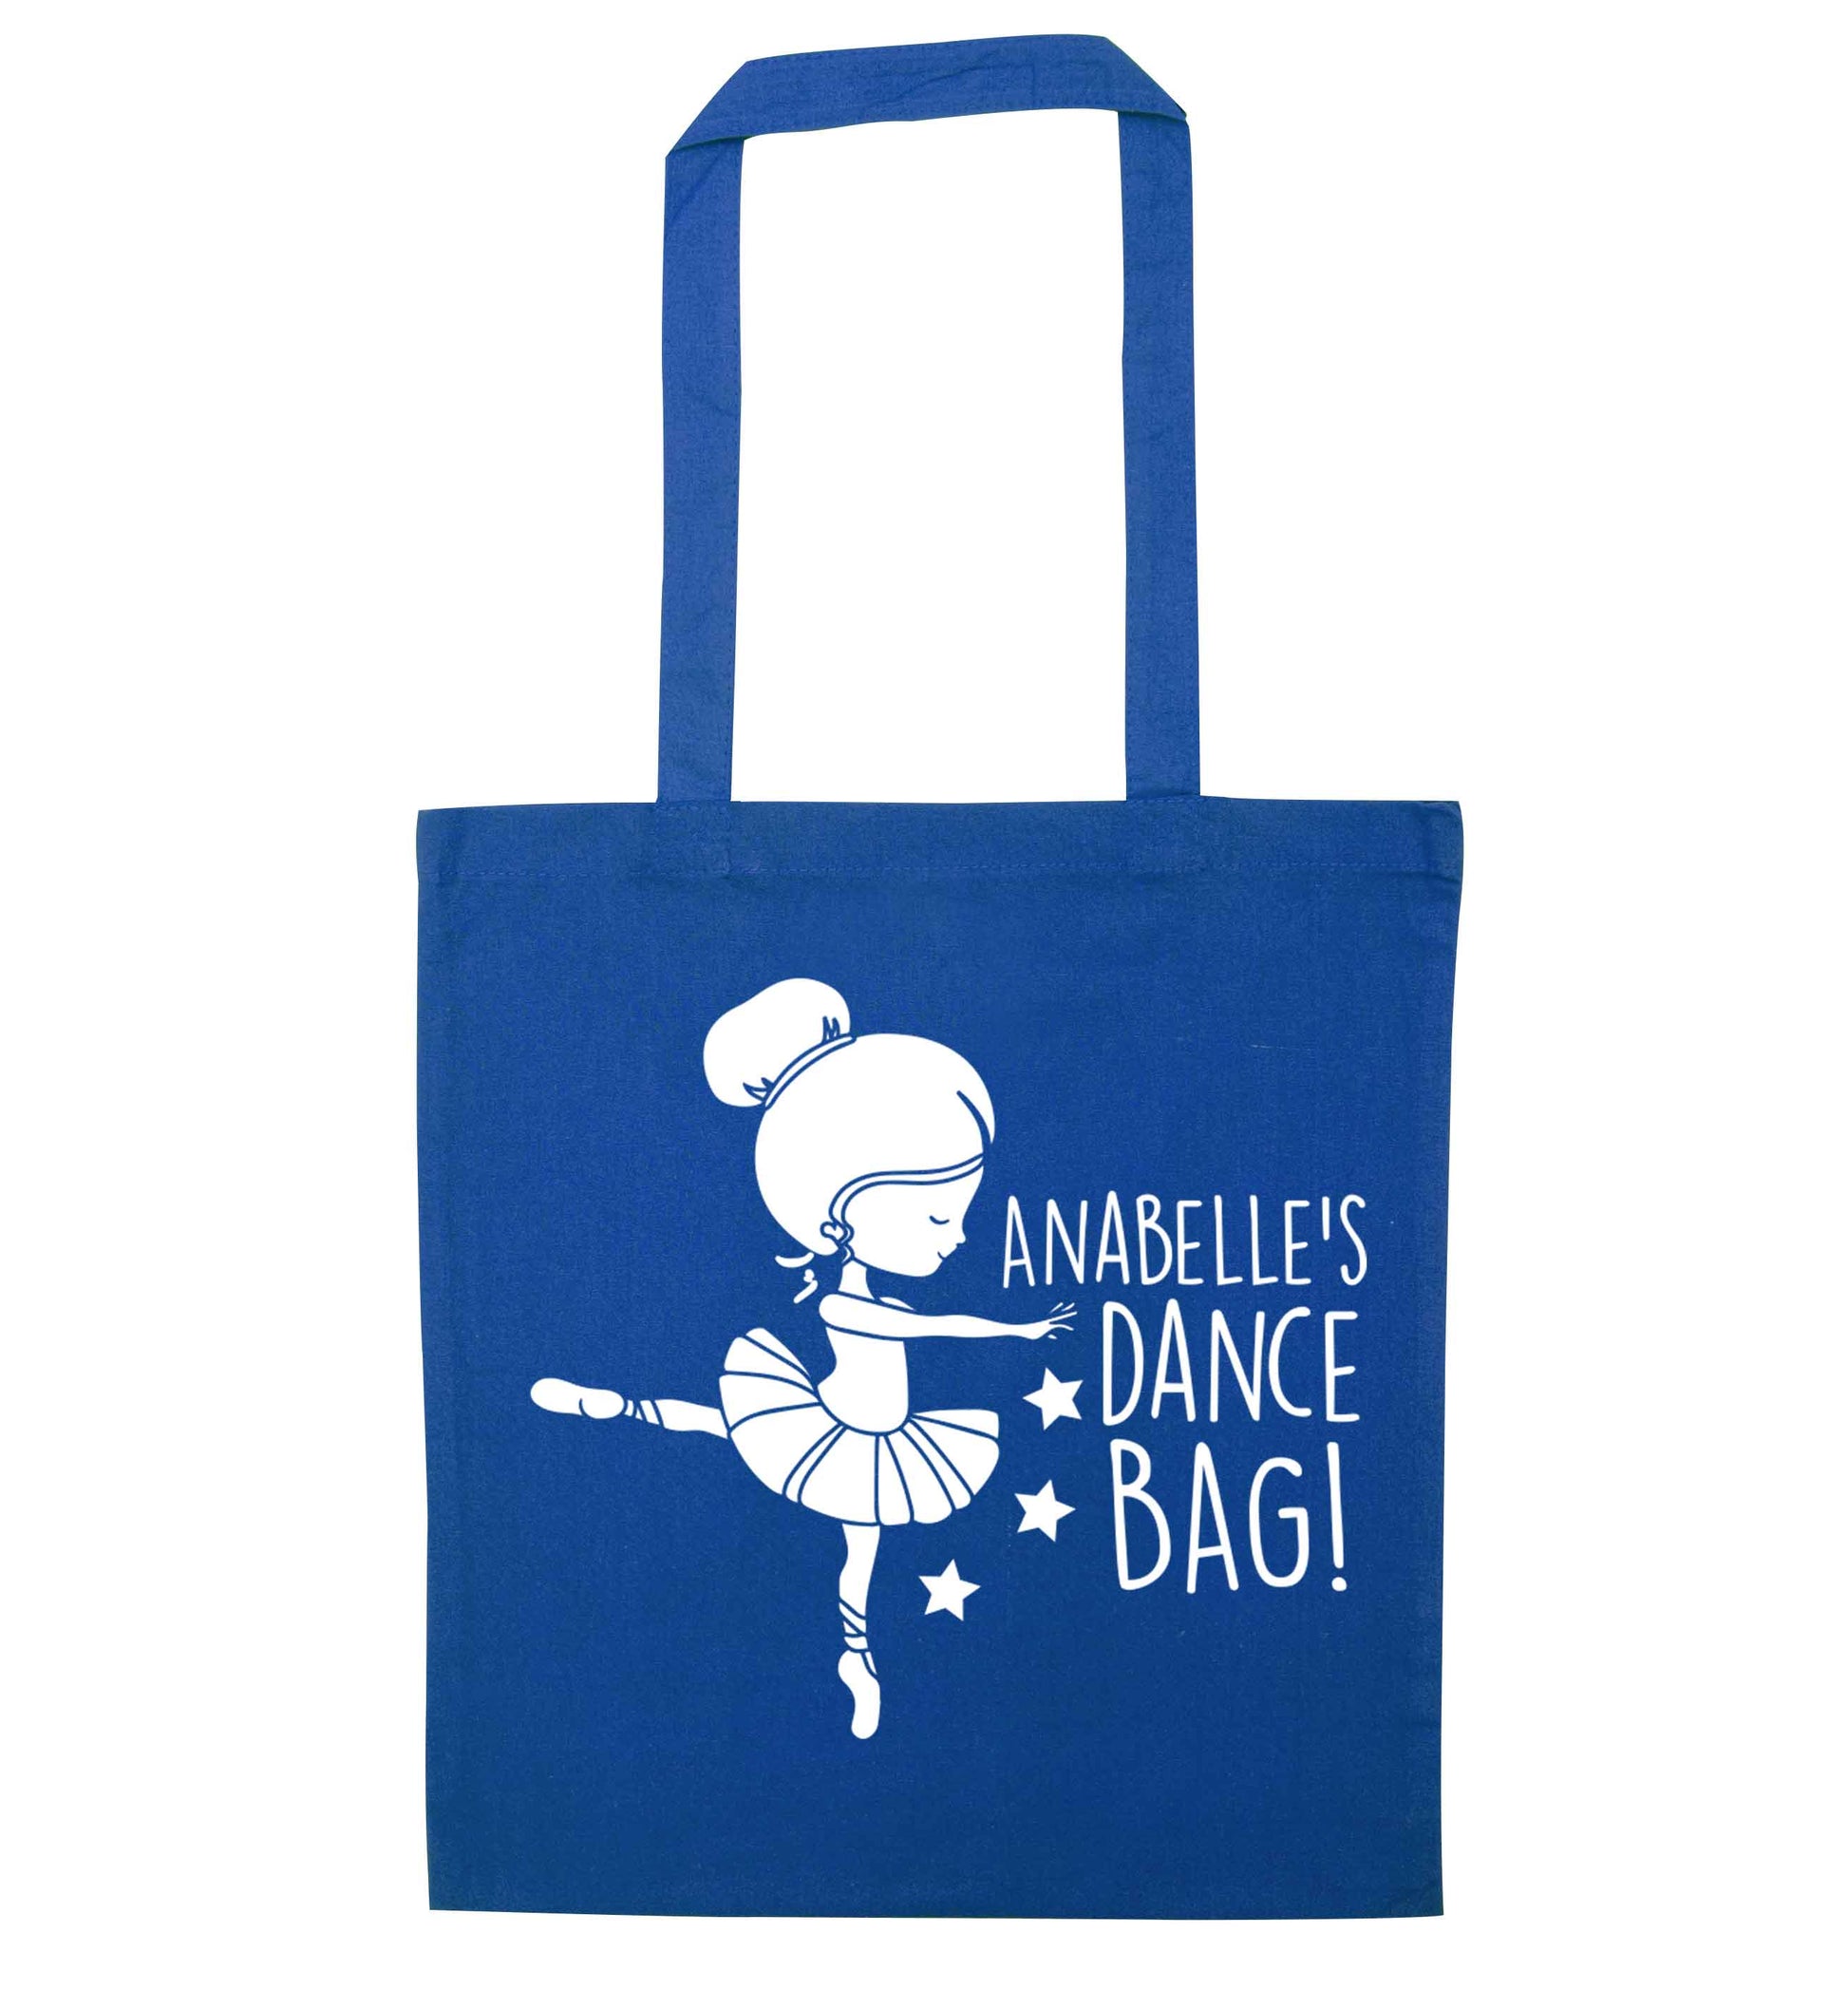 Personalised Ballet Dance Bag blue tote bag